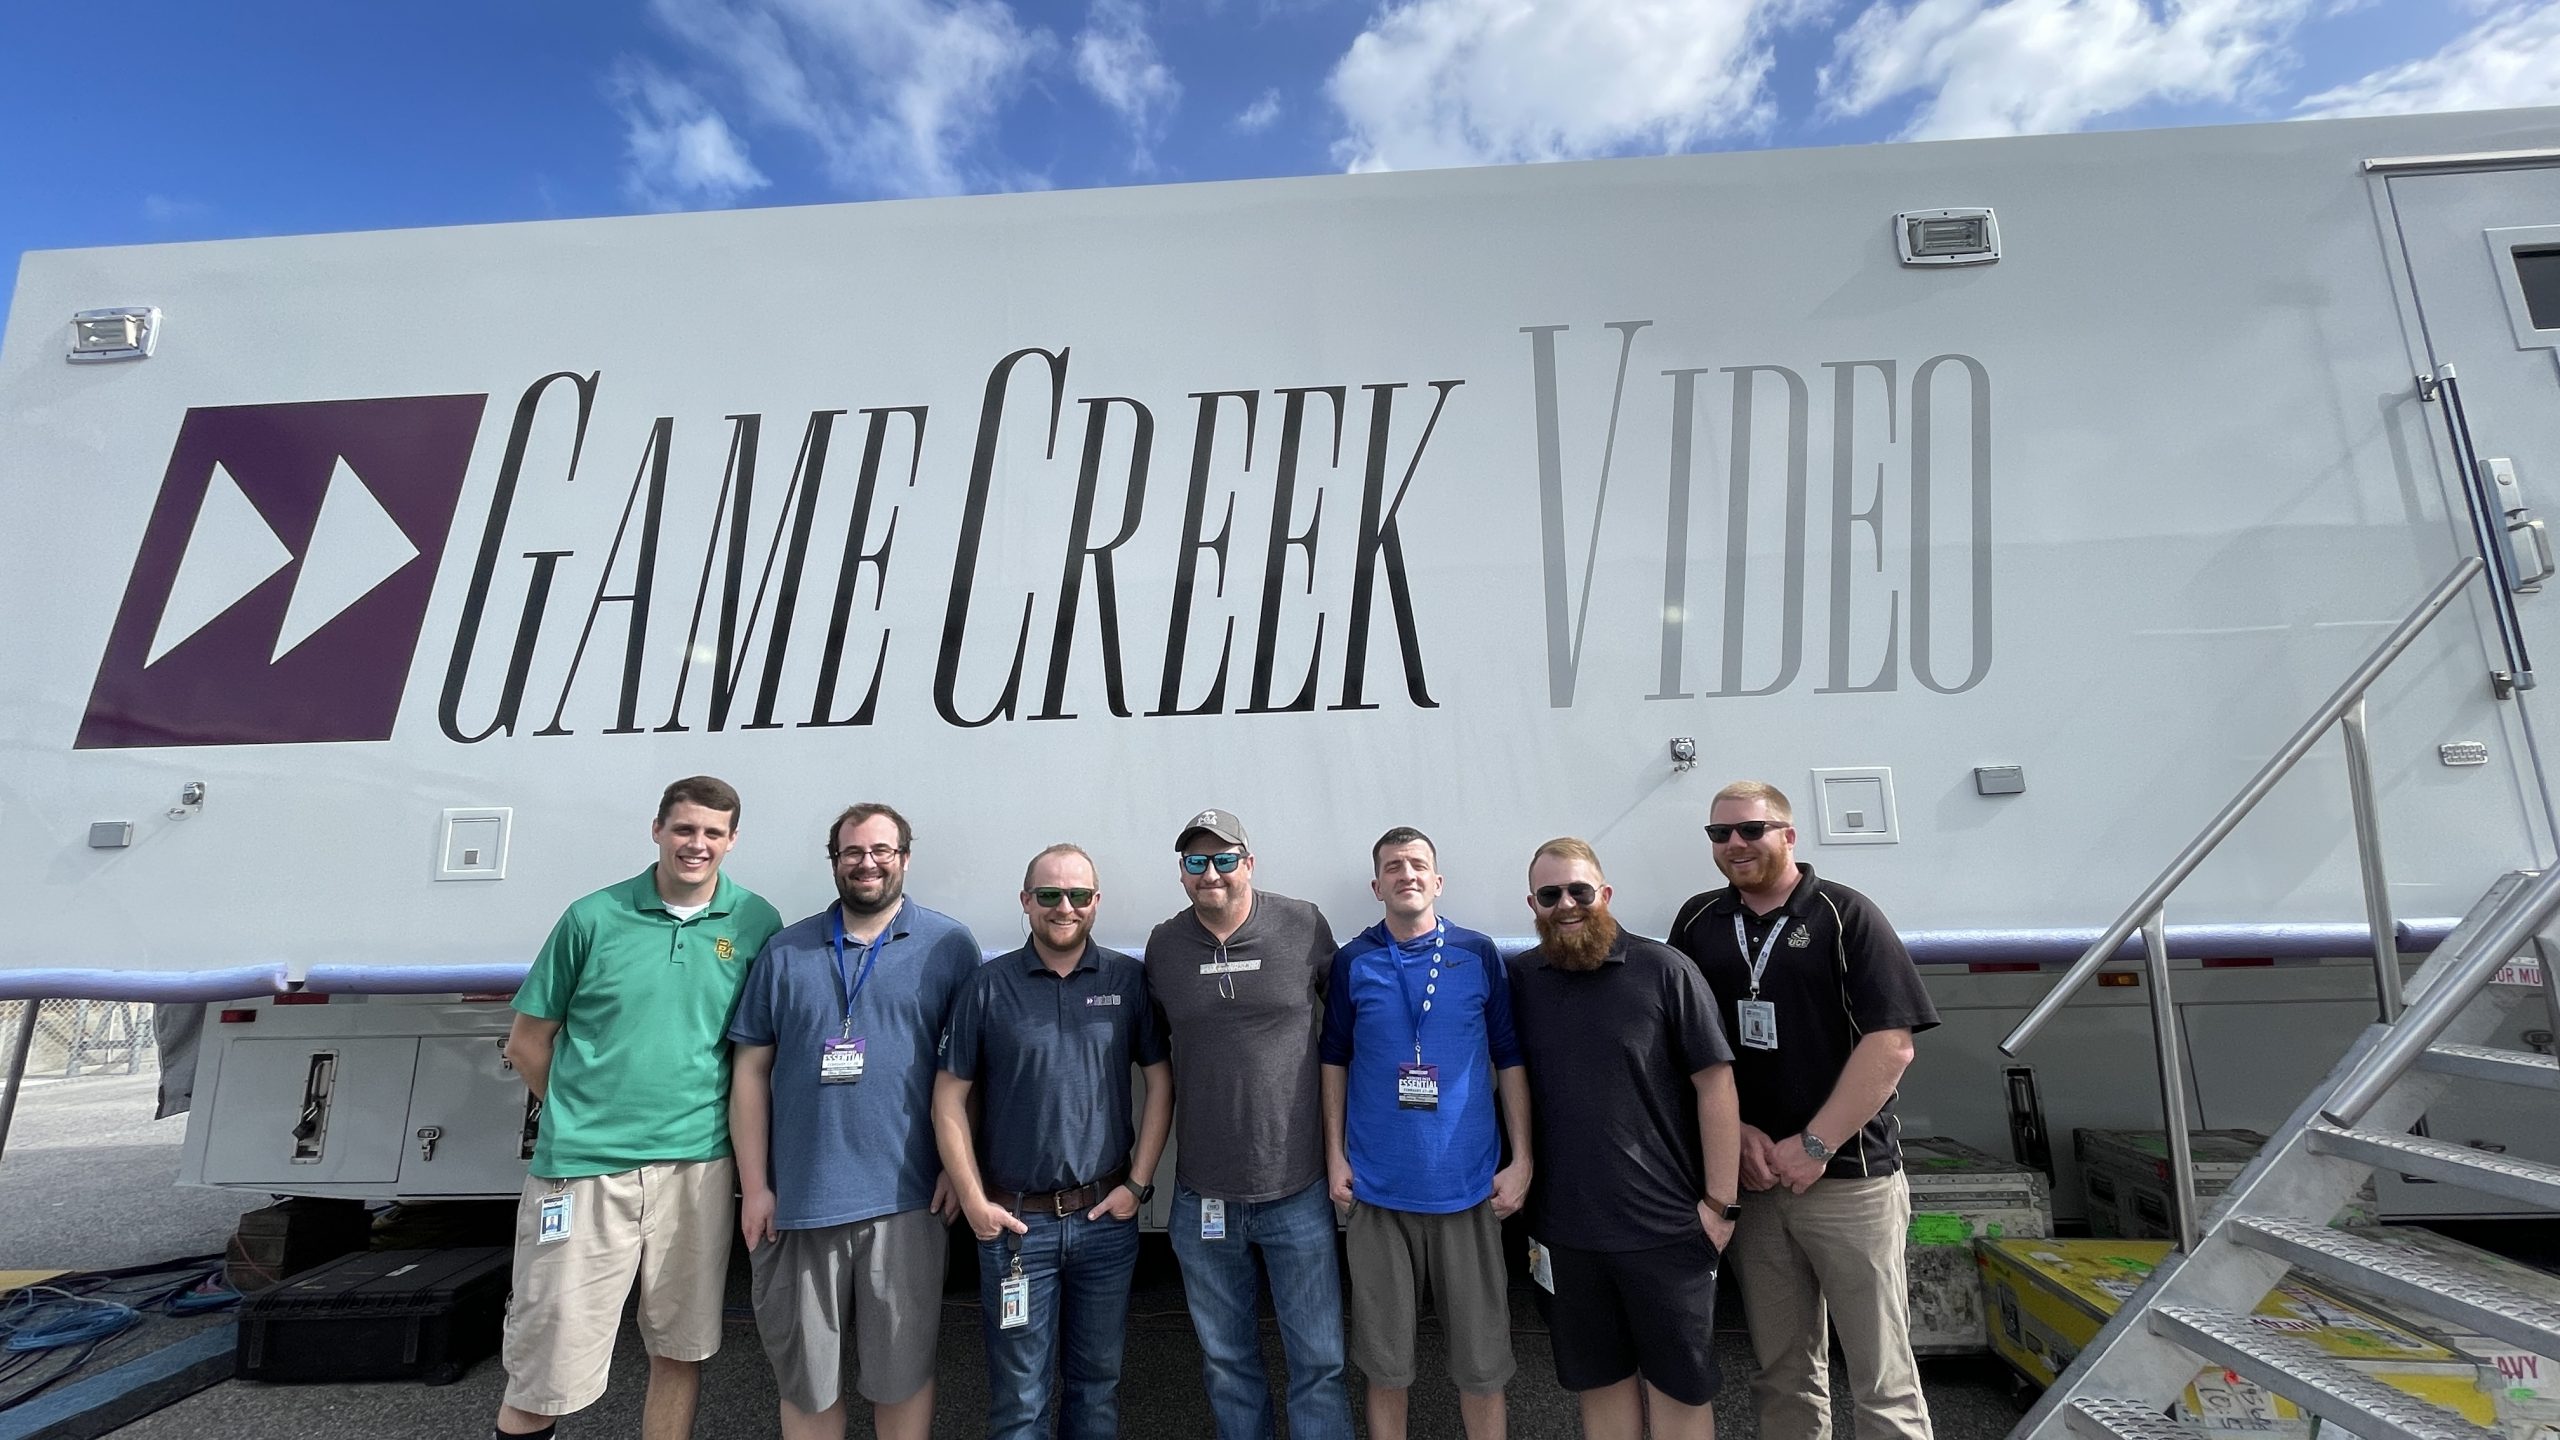 Live From Daytona 500 Game Creek Video Readies Encore Mobile Unit for NASCAR on Fox Season Opener